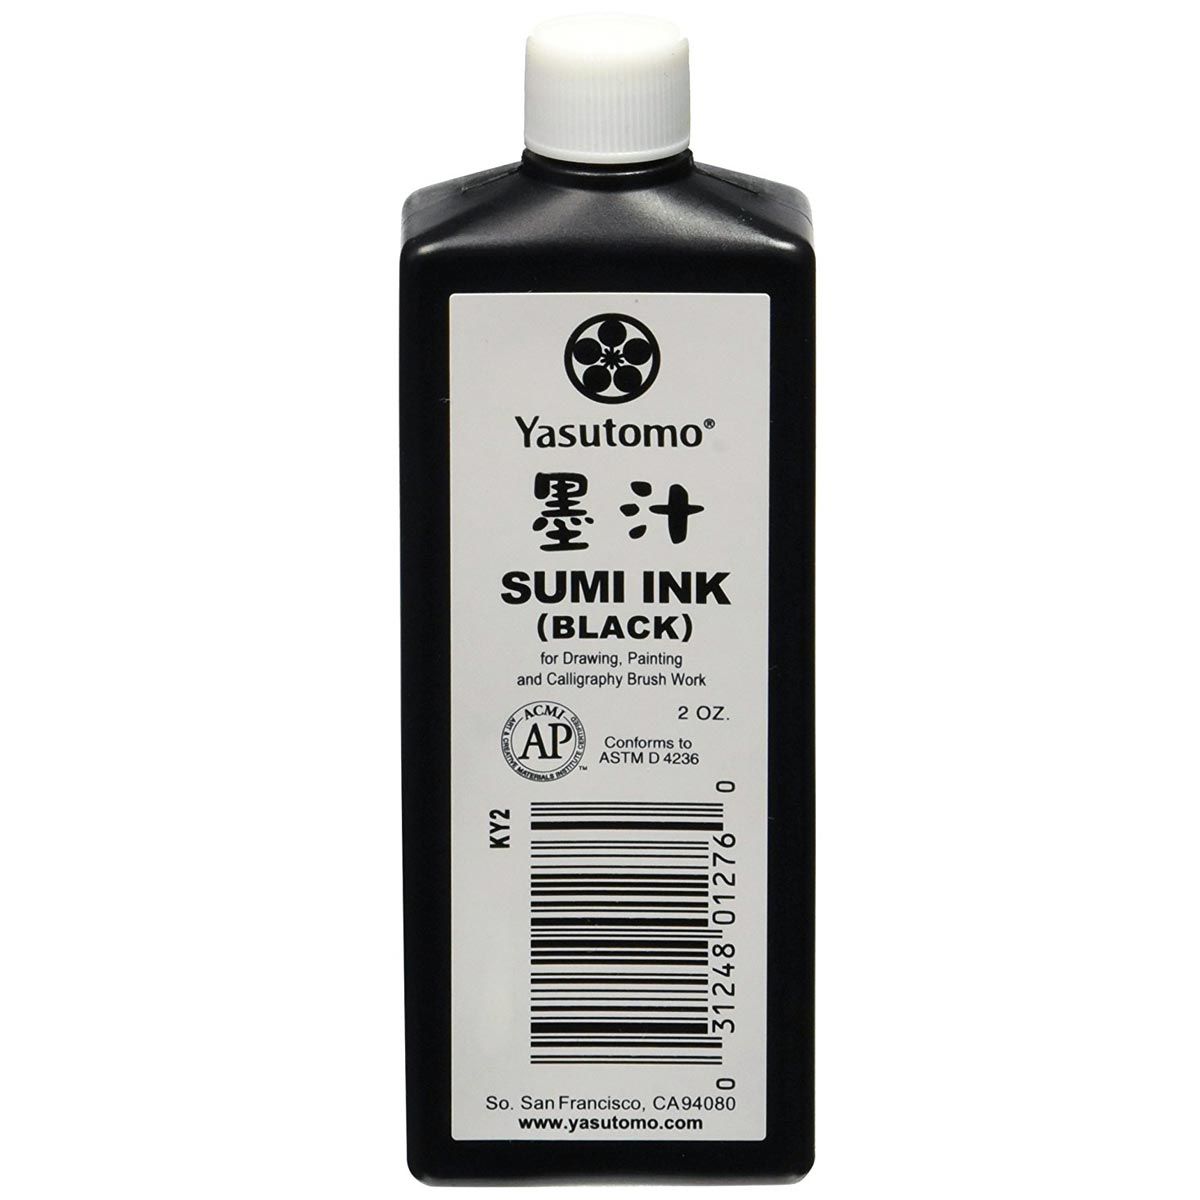 Yasutomo Sumi Ink Black 2 oz